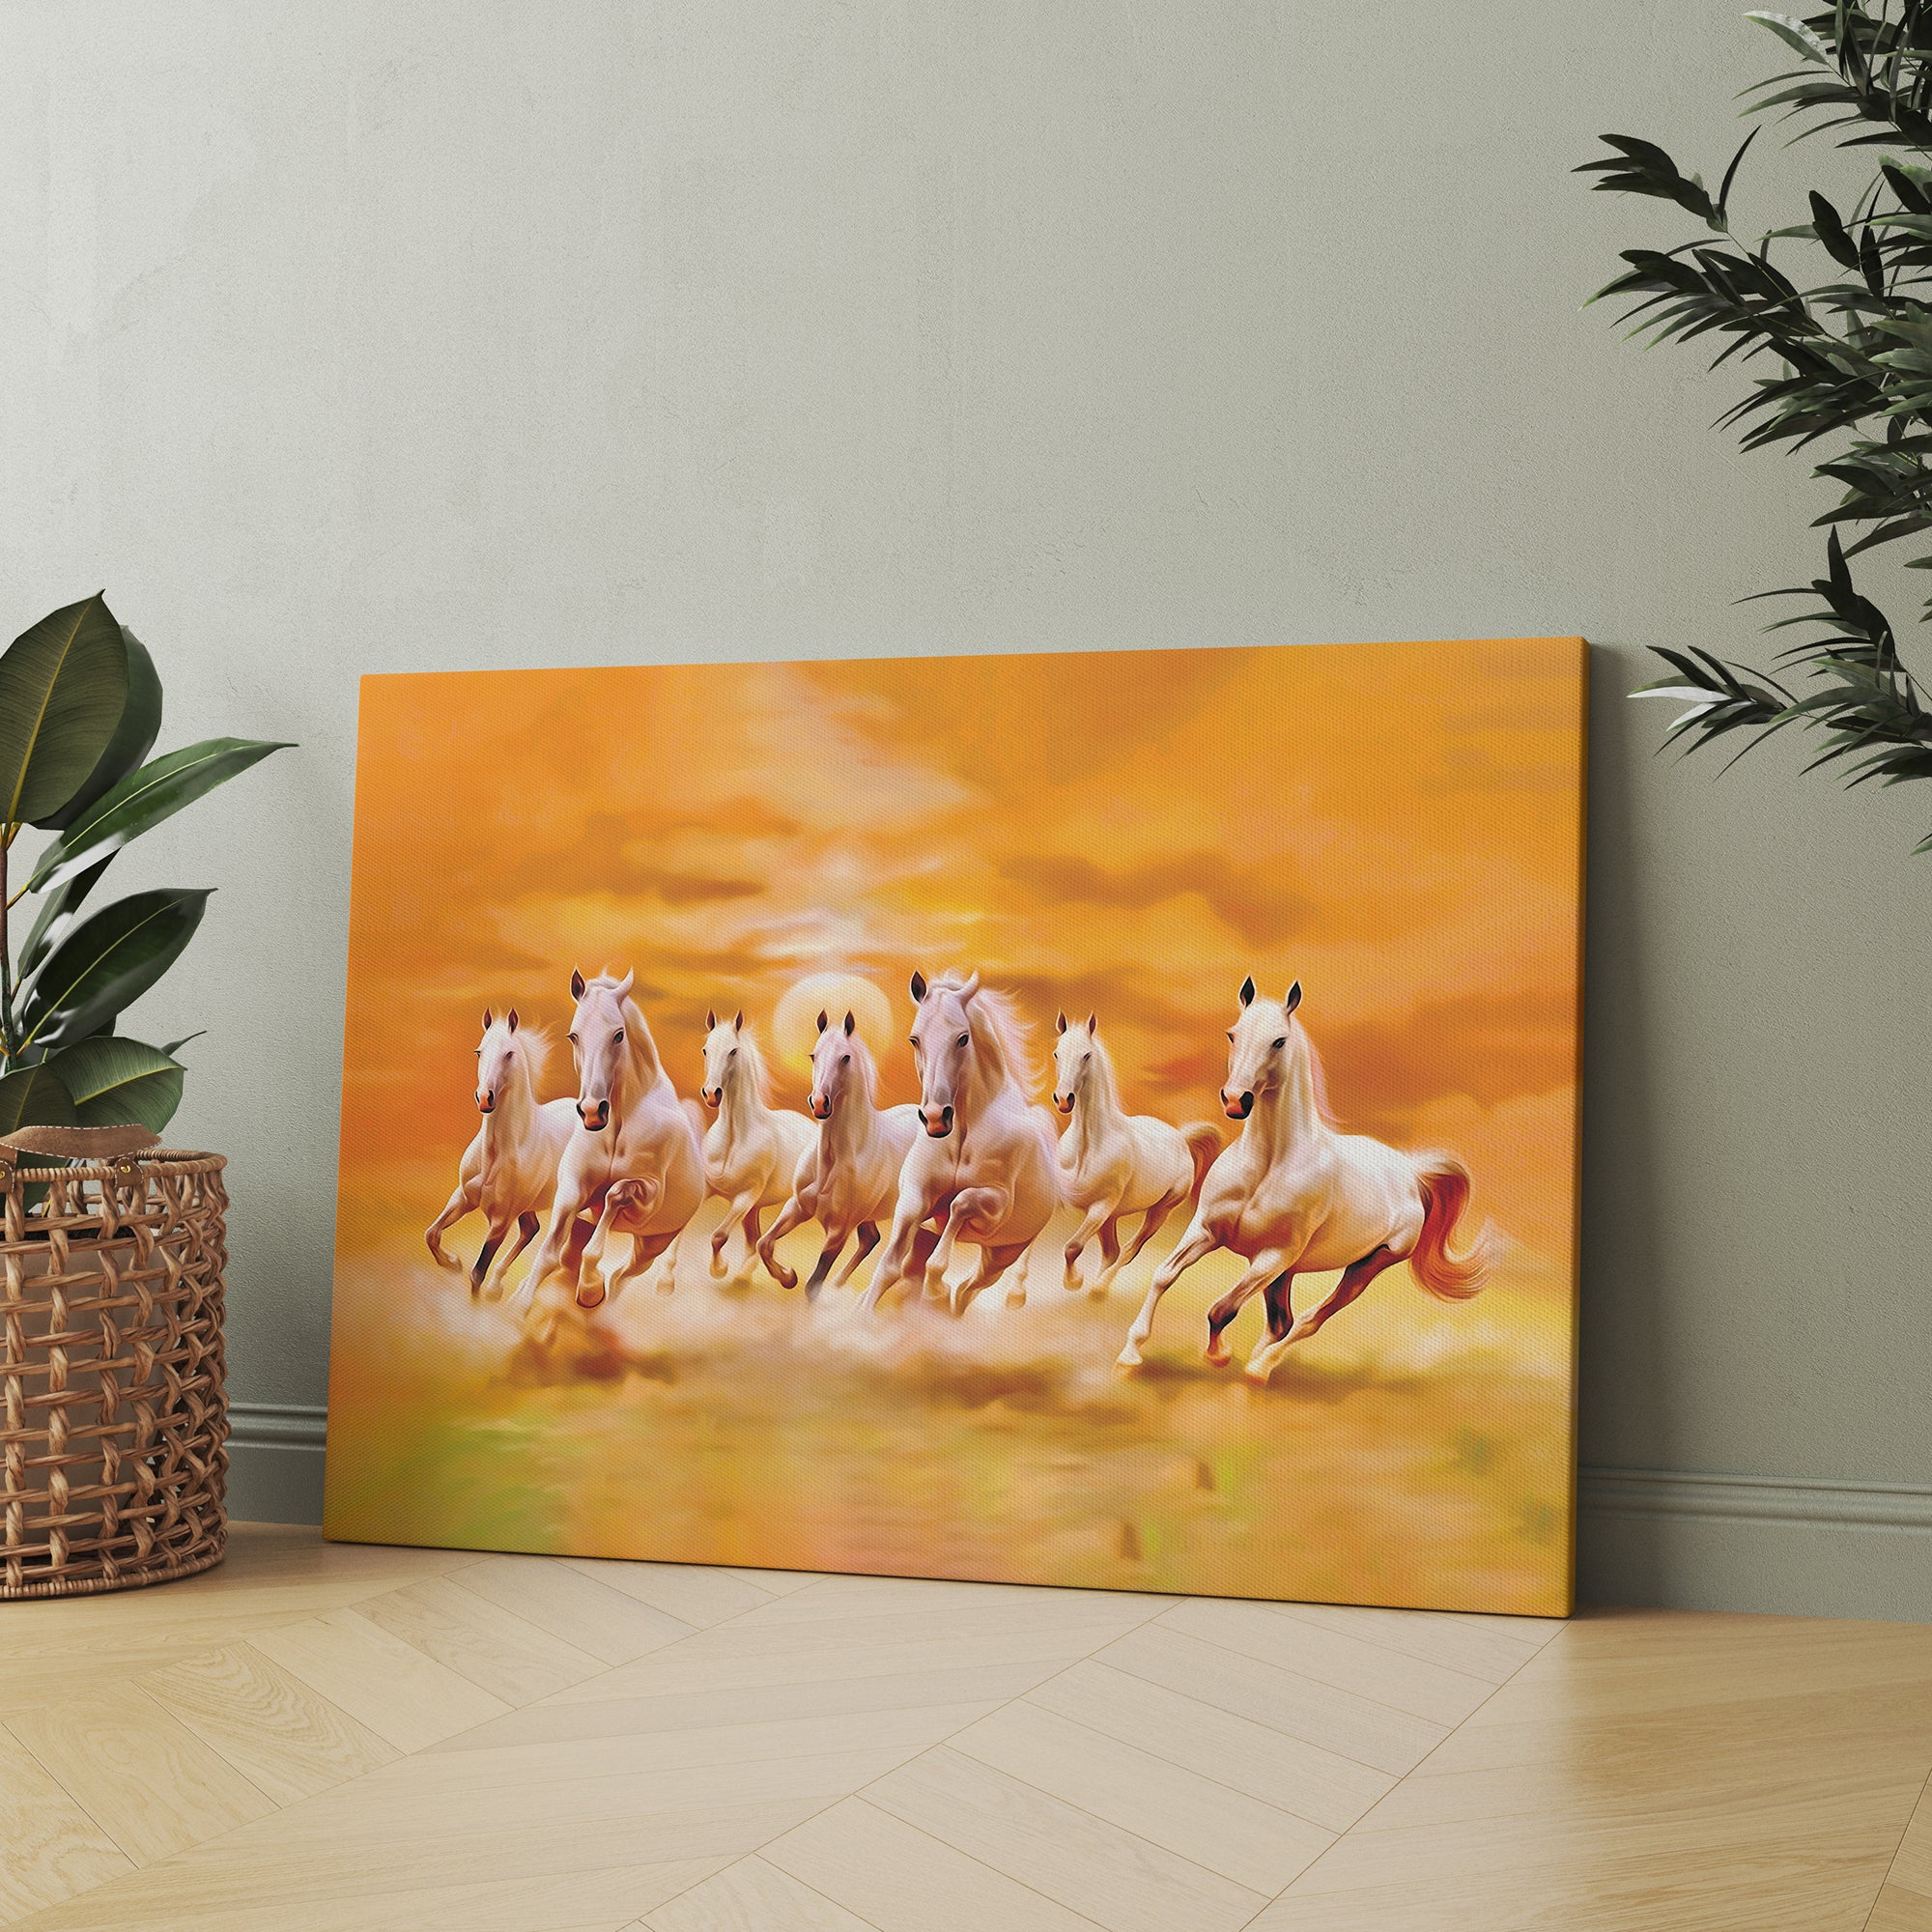 Seven Horses Running at Sunrise Morden Art  Premium Canvas Wall Painting